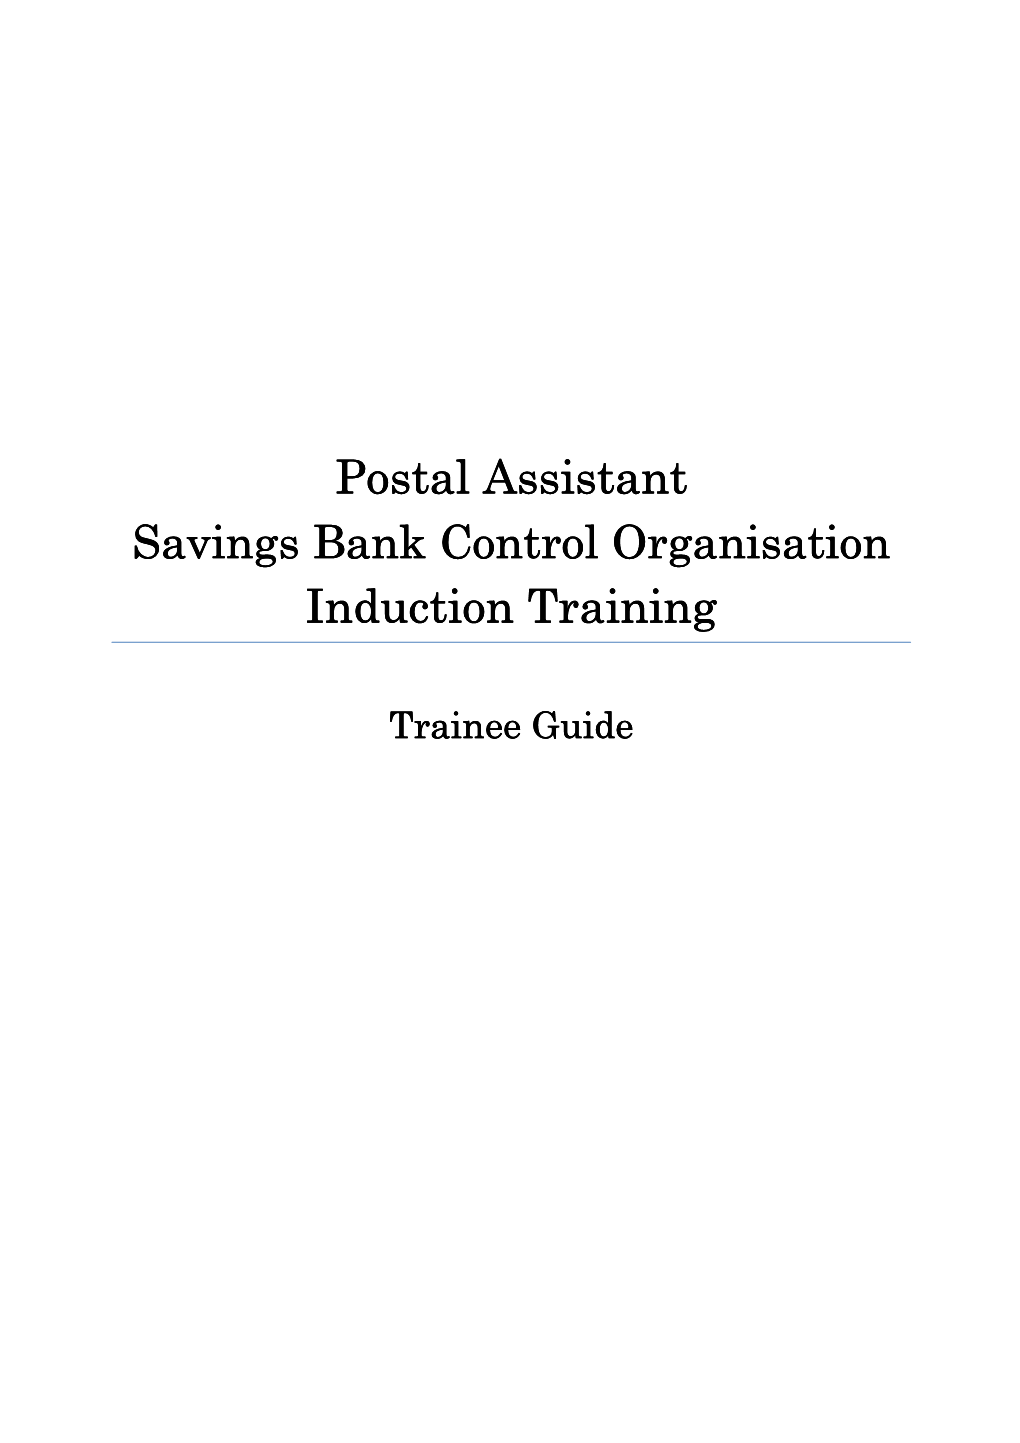 Postal Assistant Savings Bank Control Organisation Induction Training